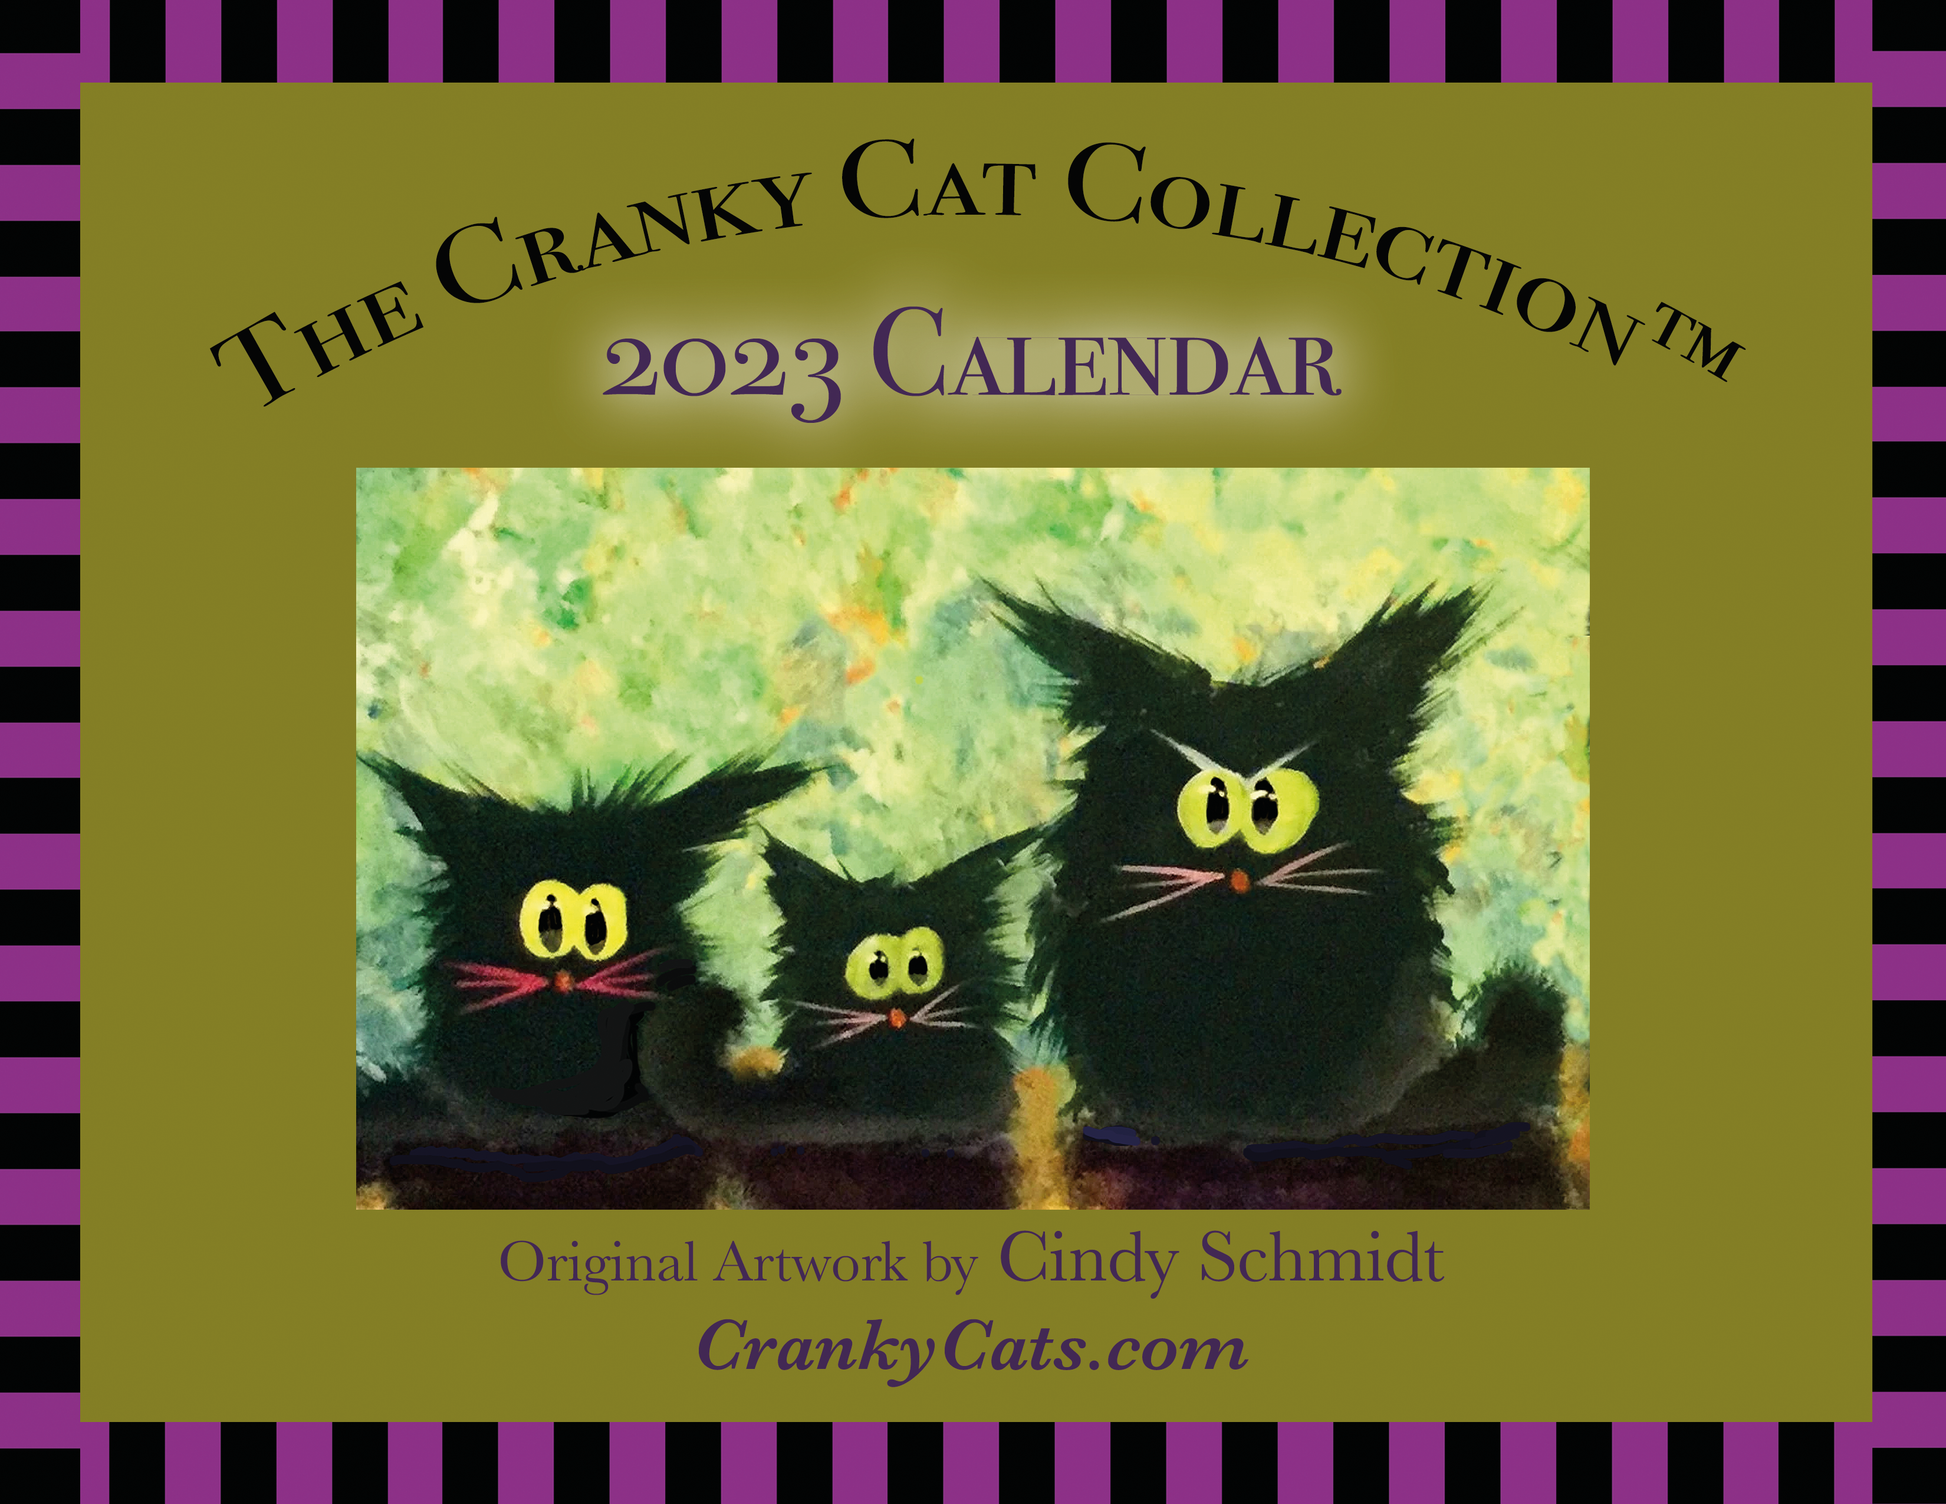 The Cranky Cat Collection™ Cindy Schmidt